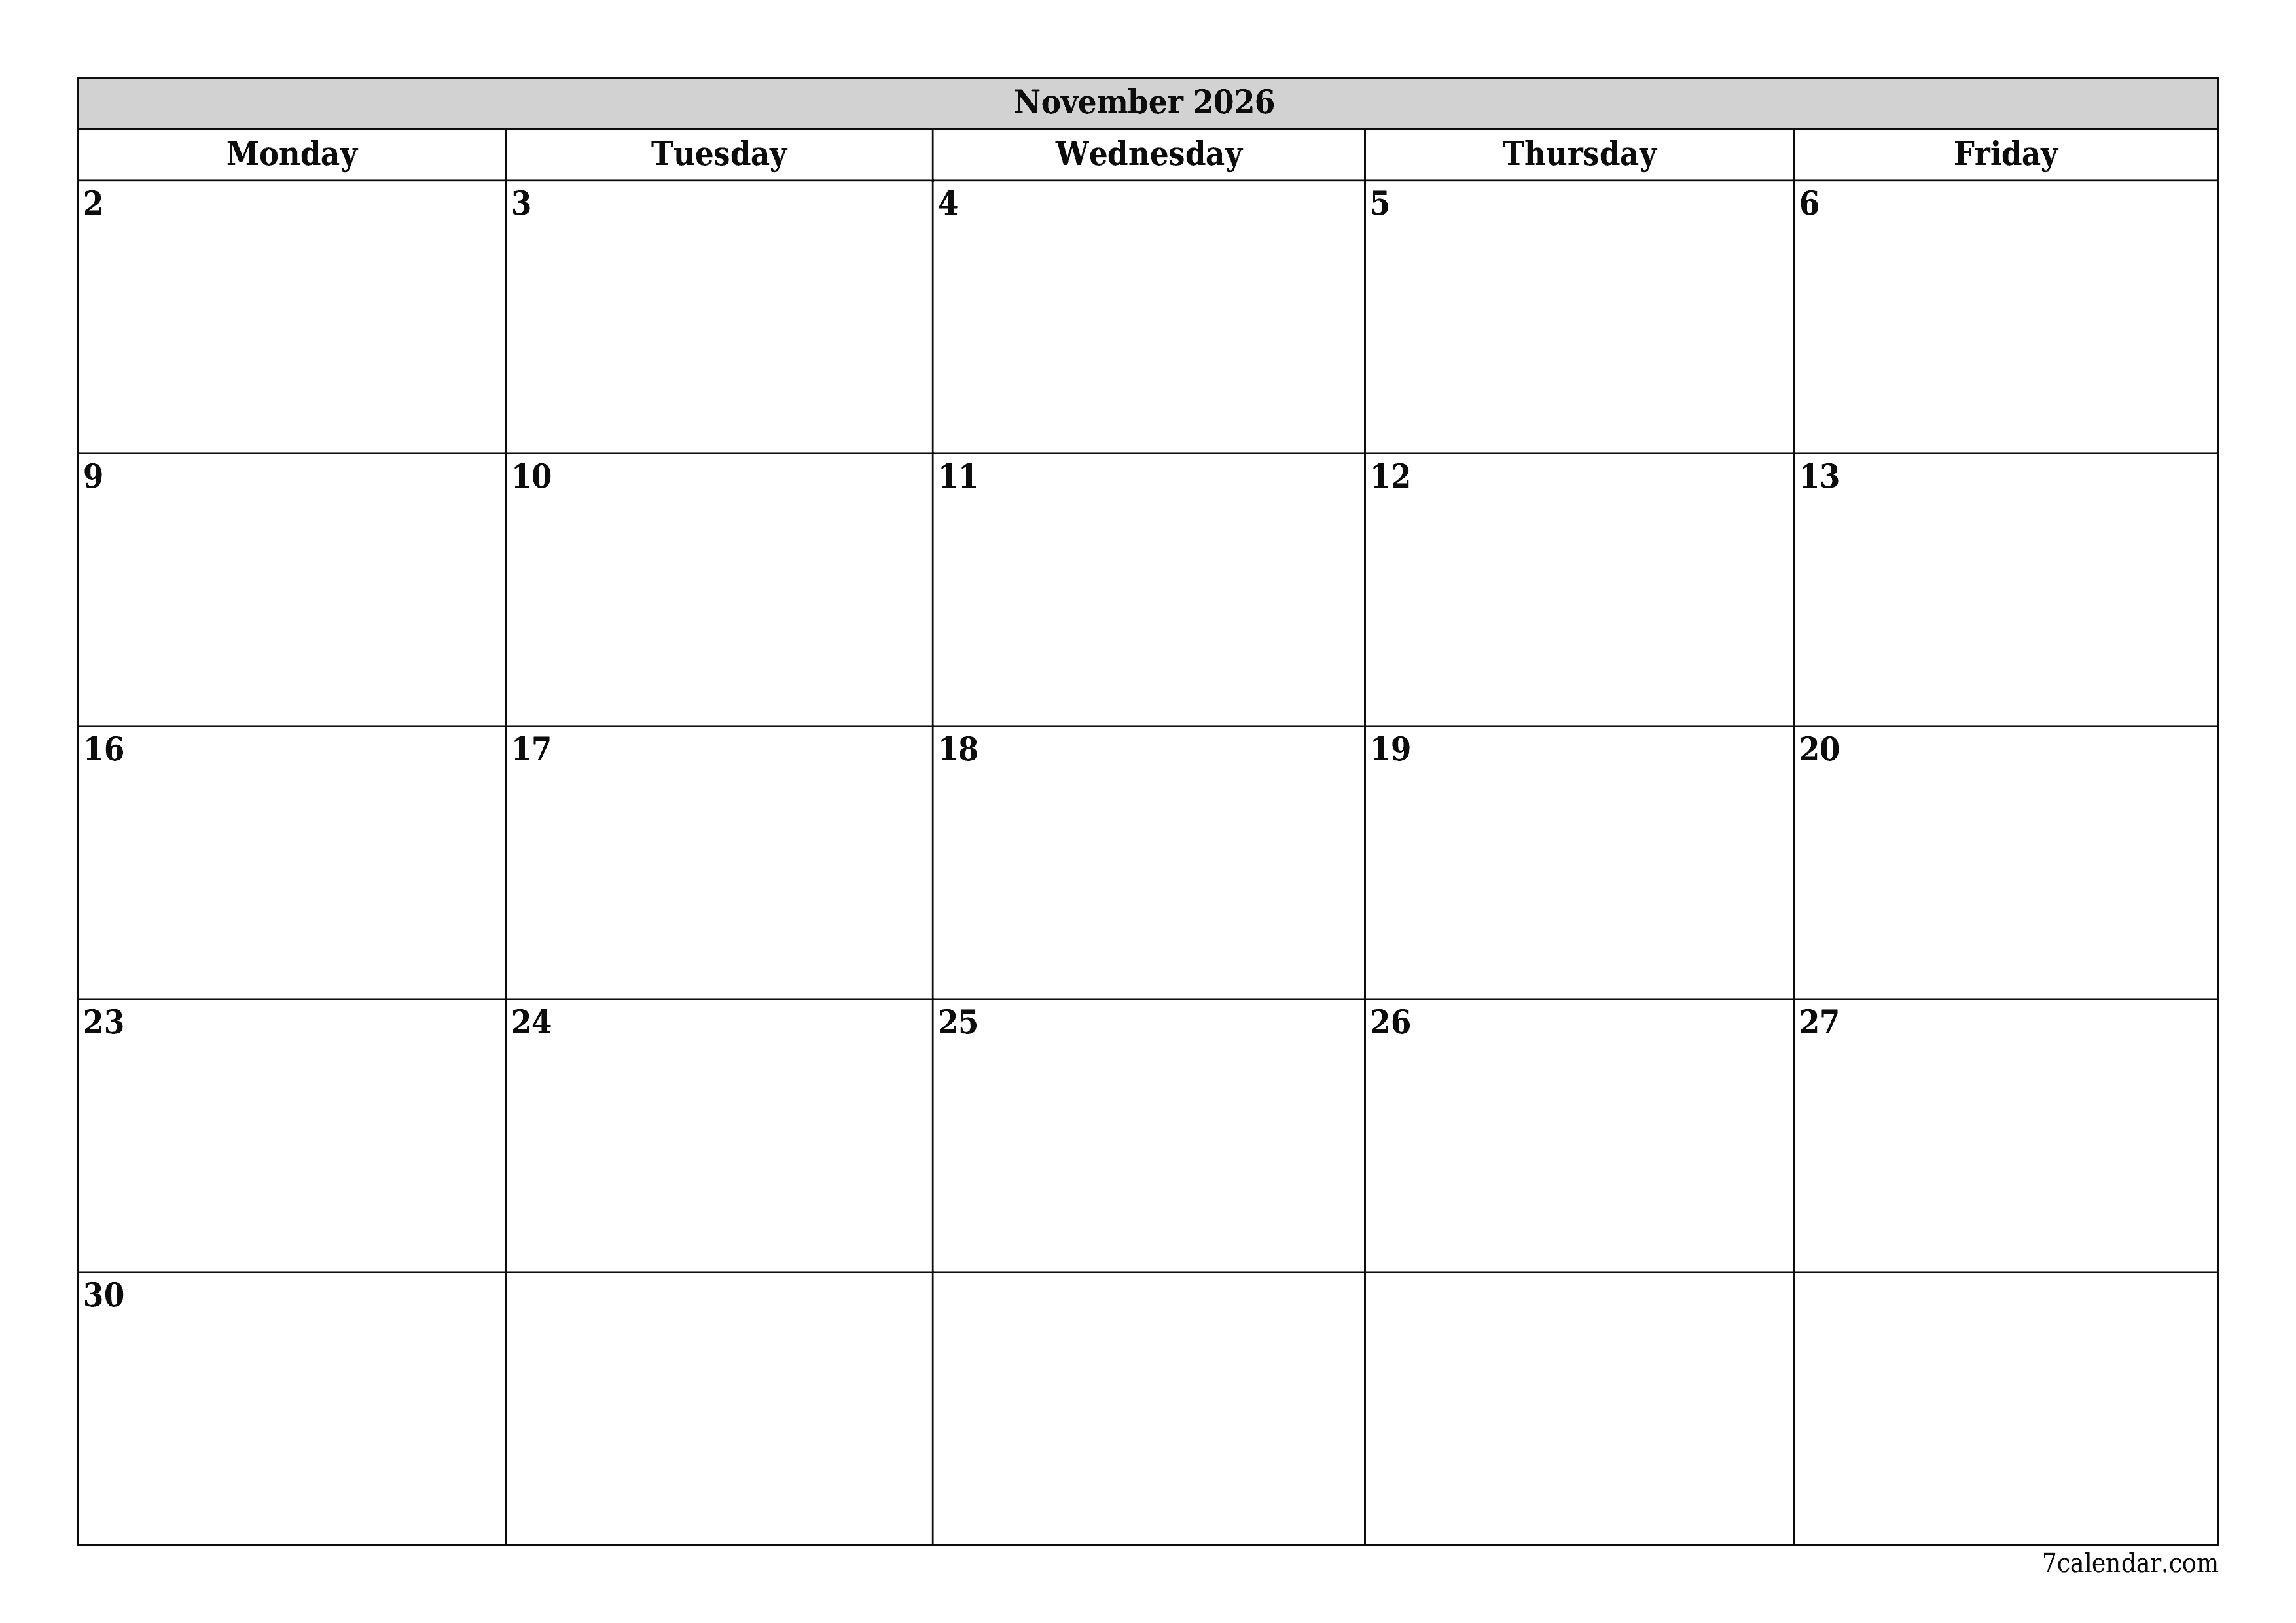 printable wall template free horizontal Monthly planner calendar November (Nov) 2026